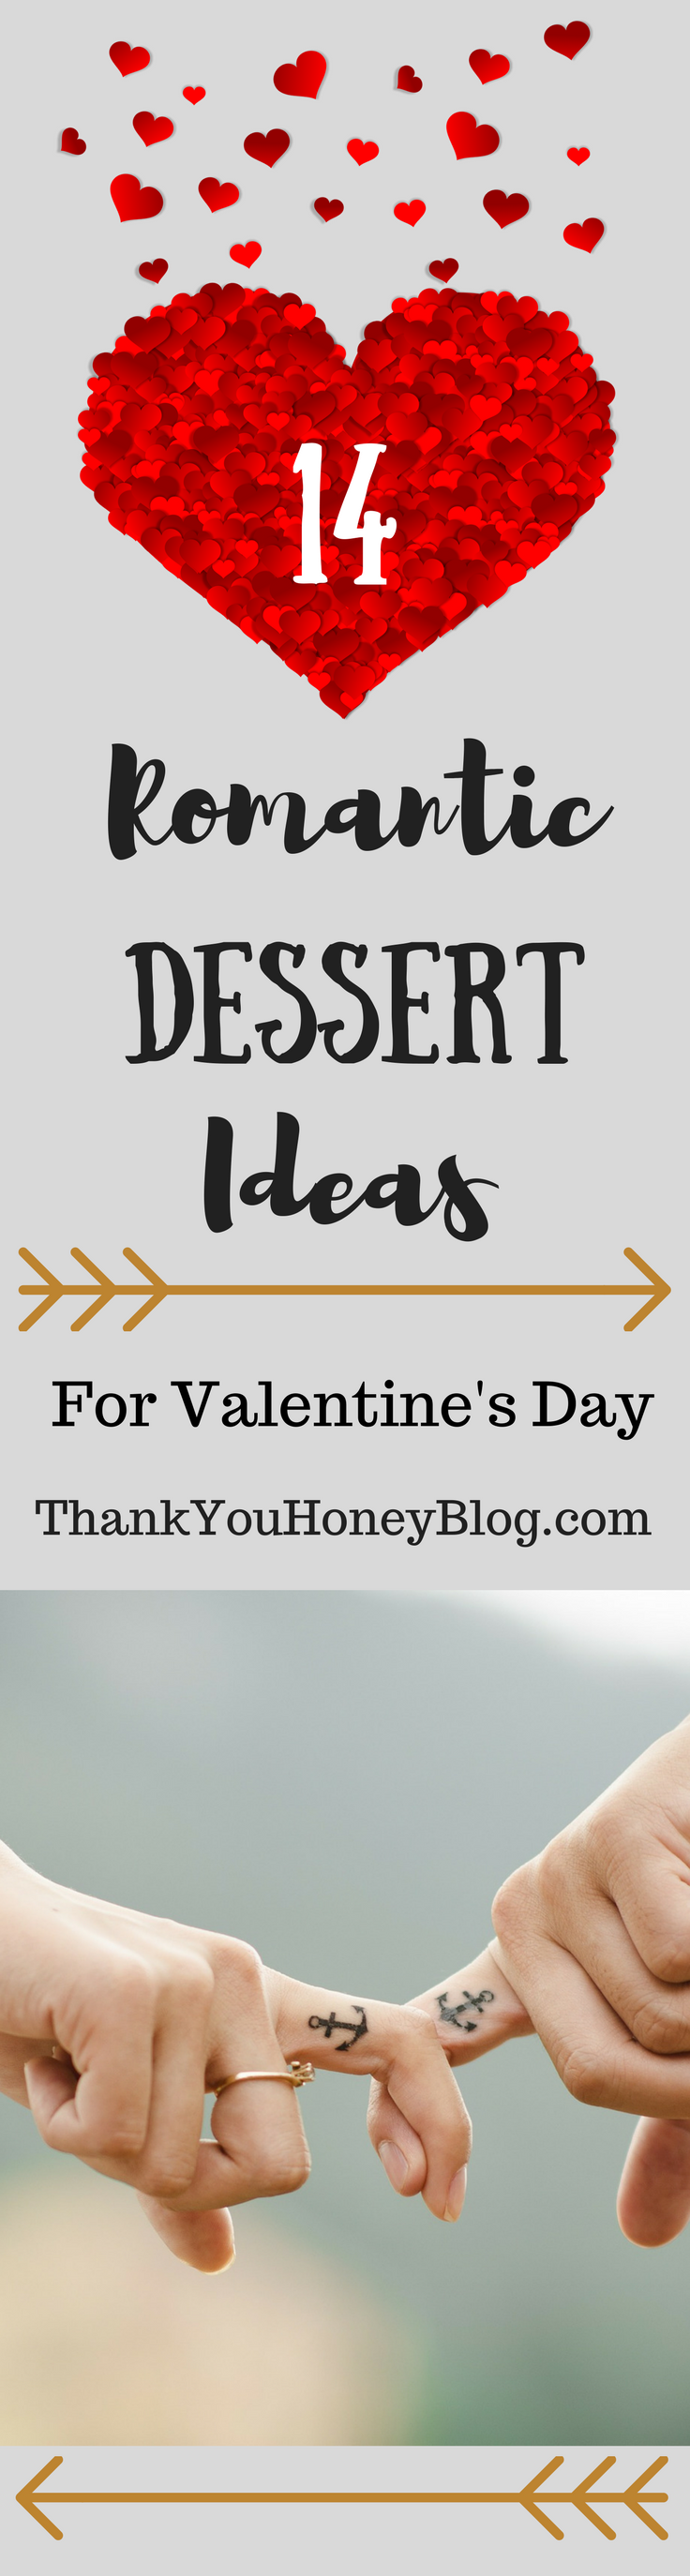 14 Romantic Dessert Ideas for Valentine's Day